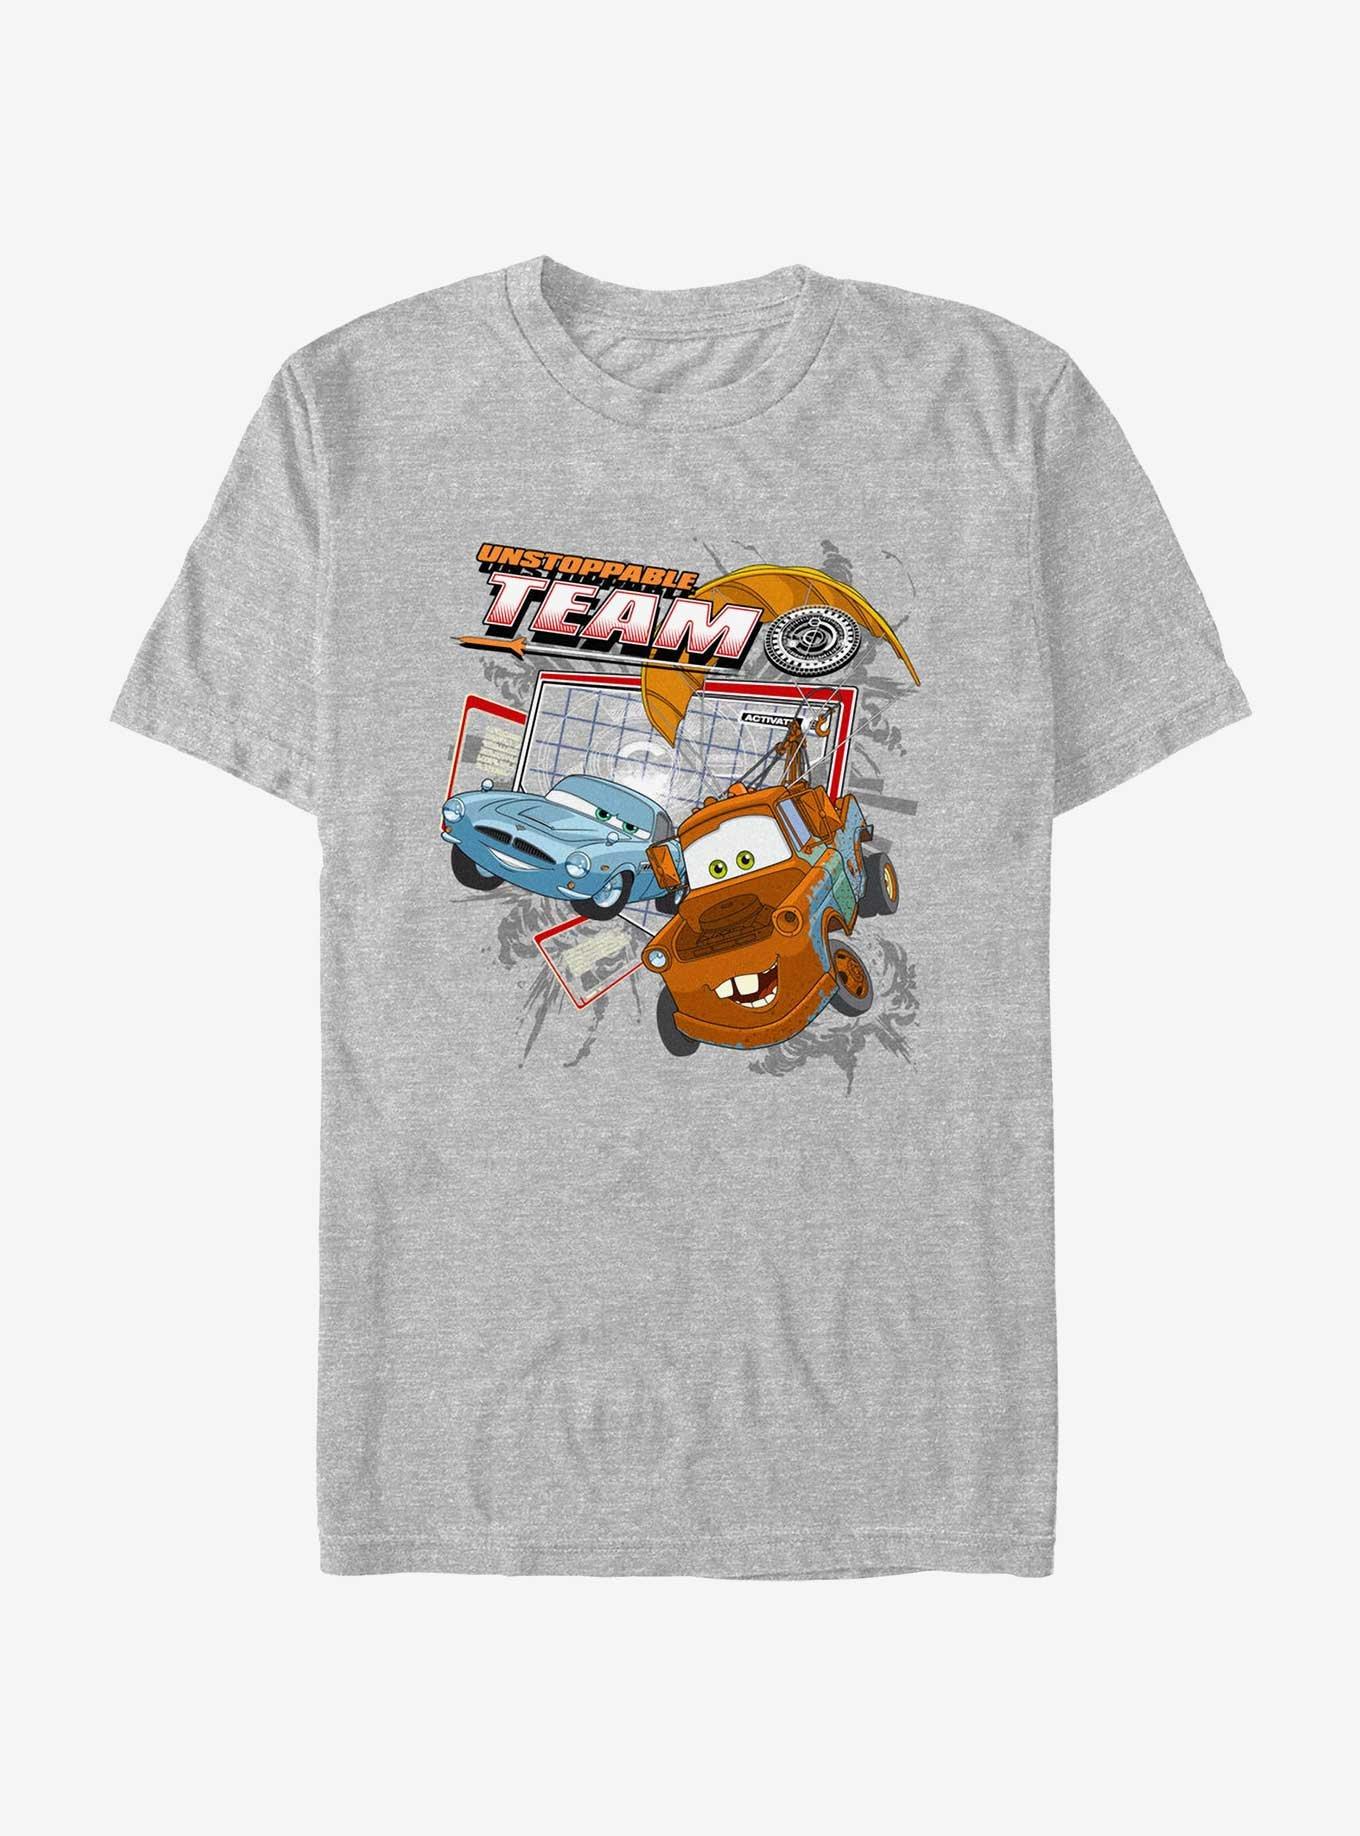 Disney Pixar Cars Unstoppable Team T-Shirt